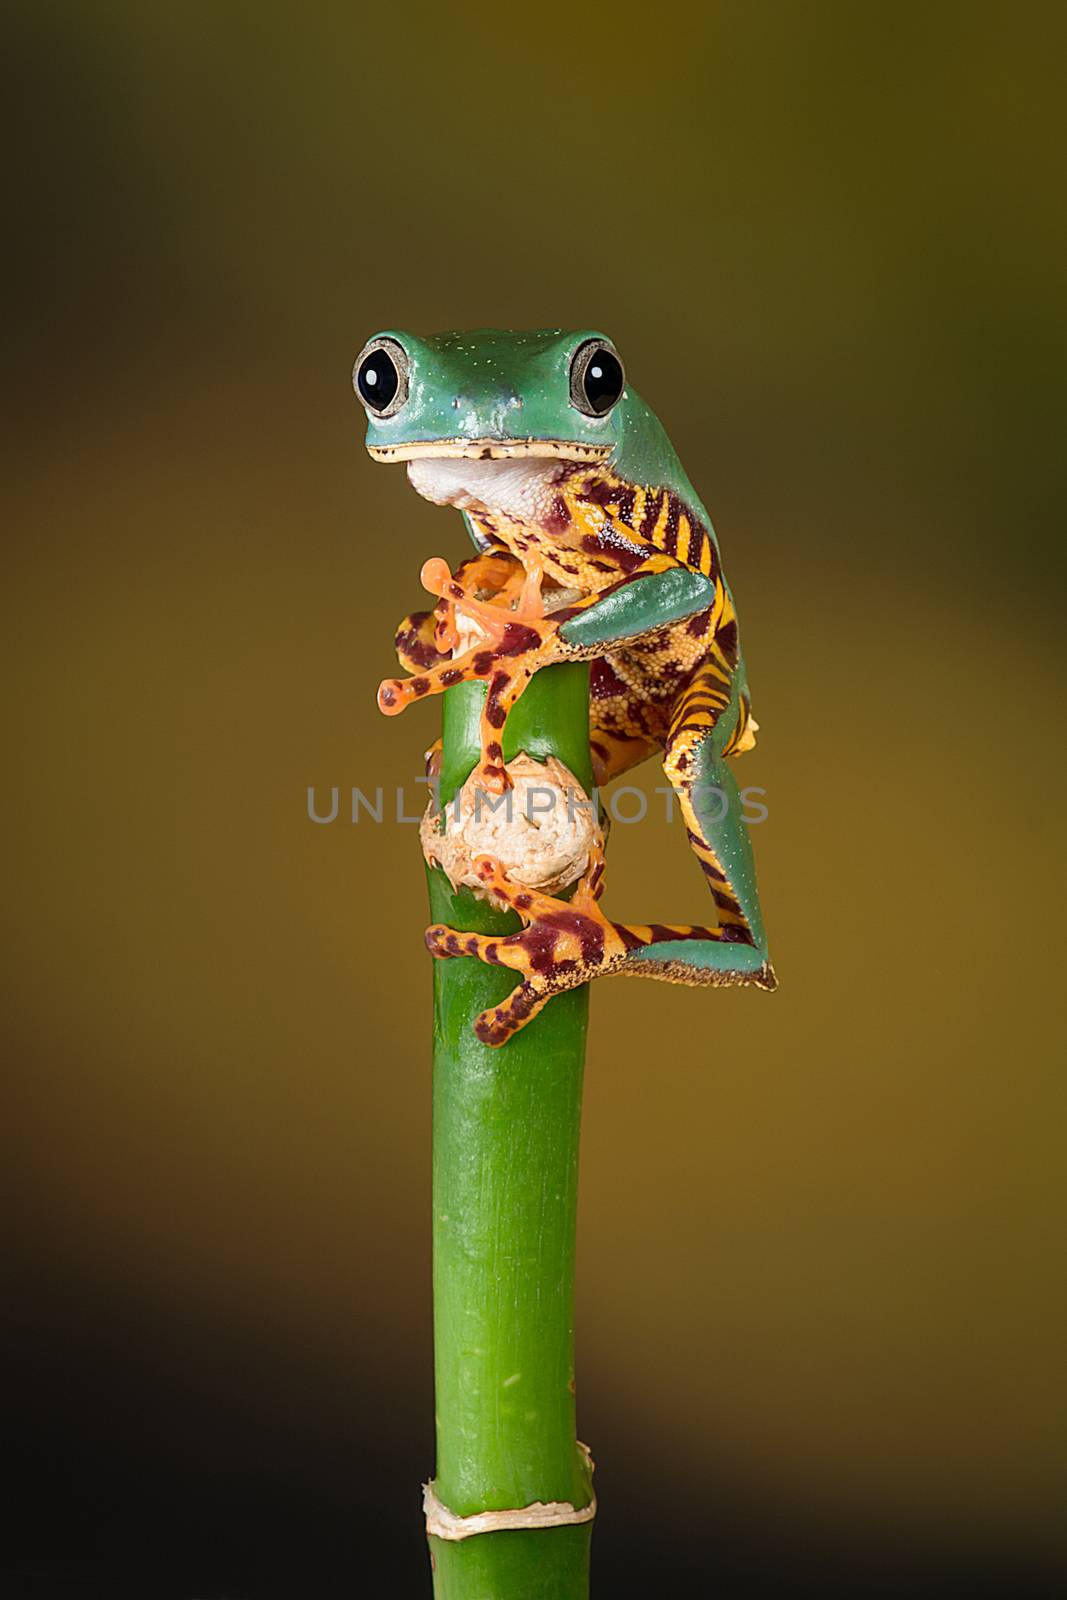 Waxy tree frog by alan_tunnicliffe